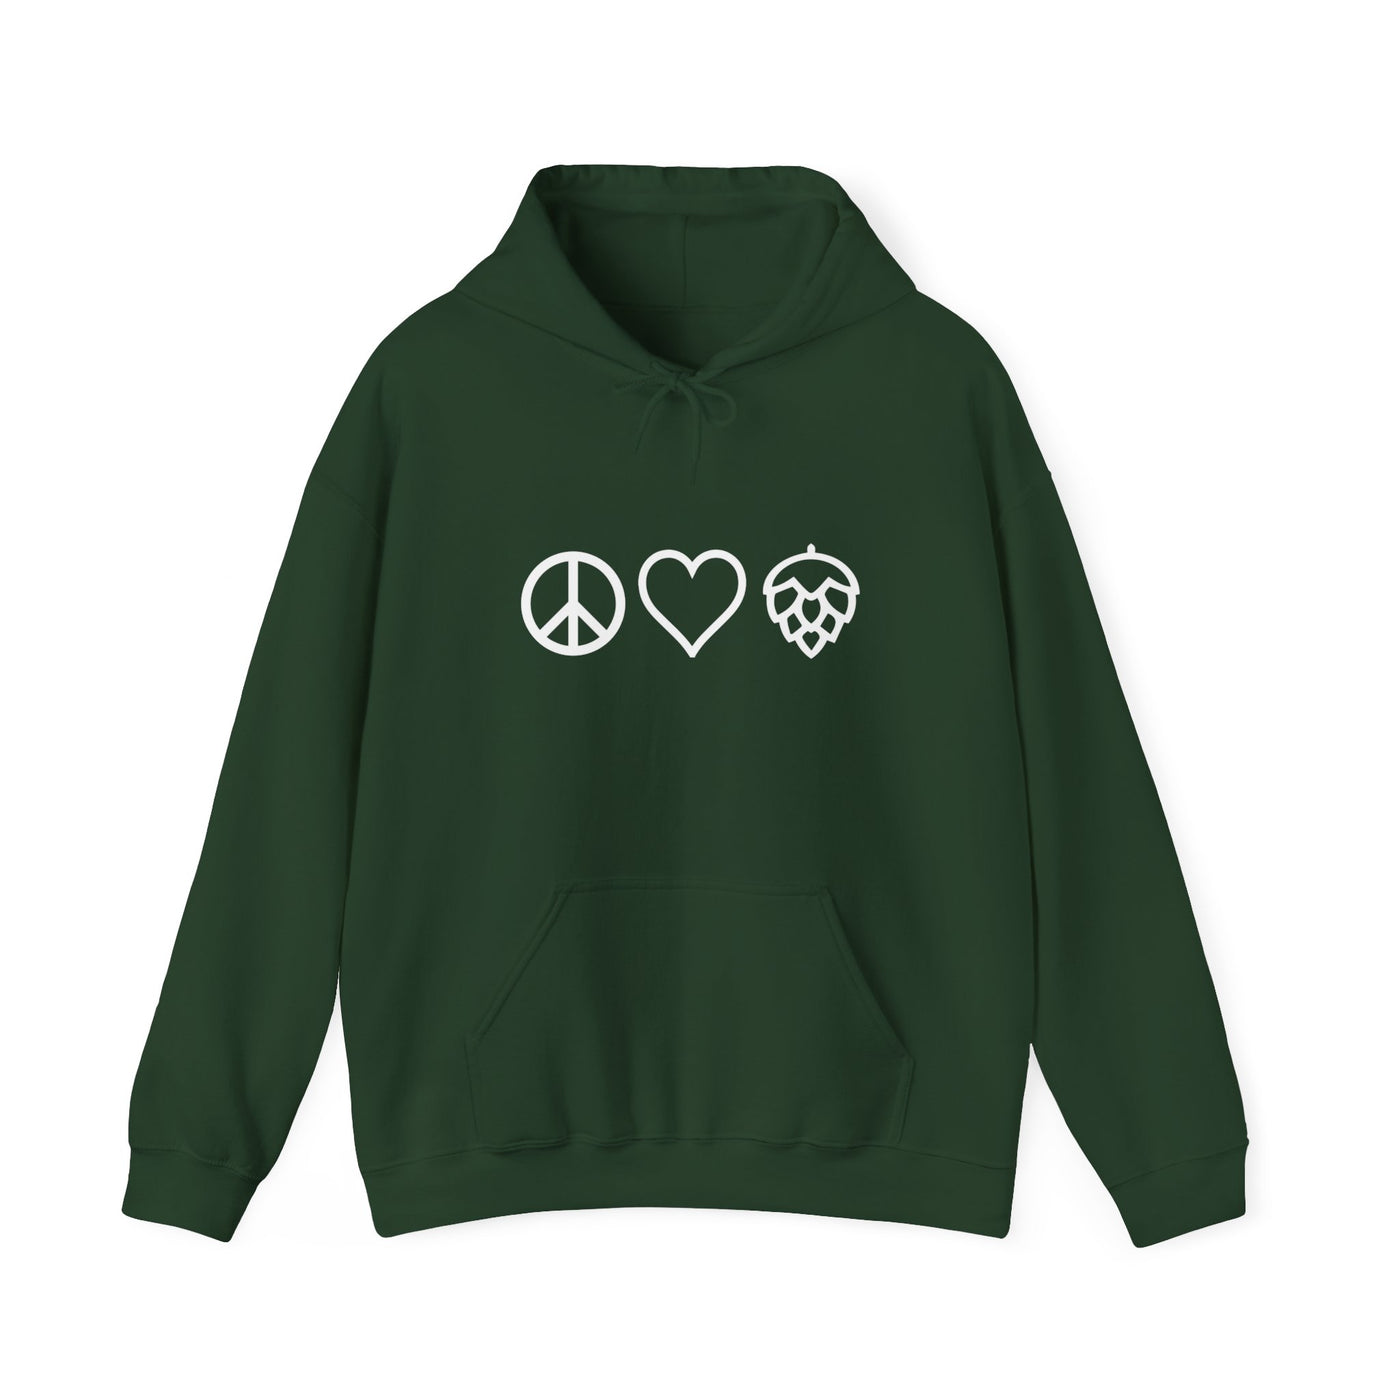 Peace Love And Hops Hooded Sweatshirt